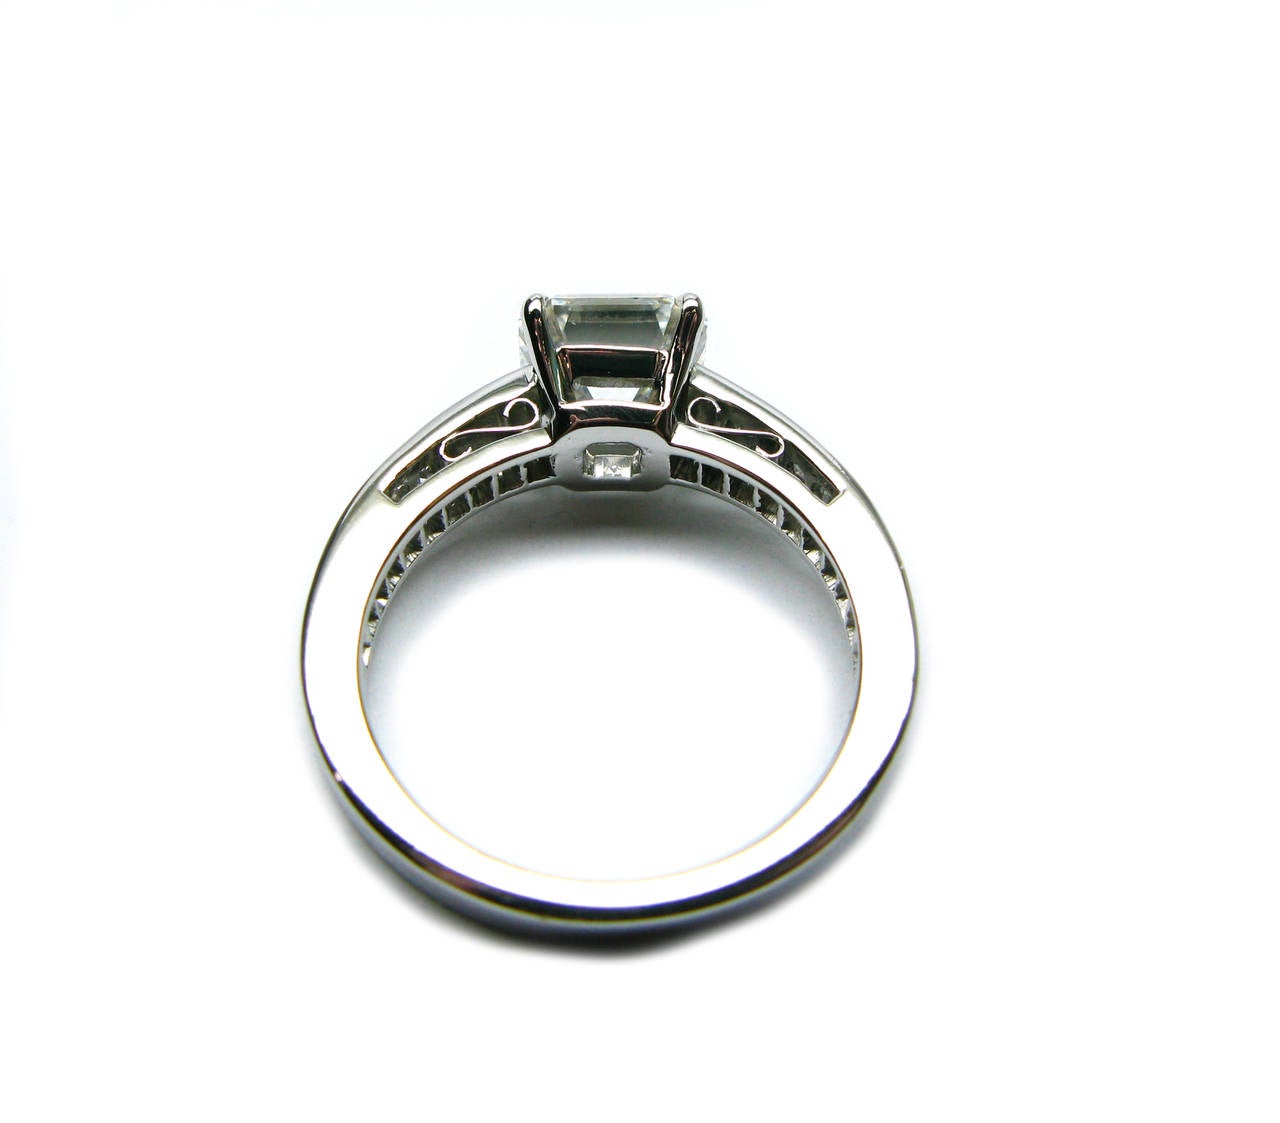 2.06 carat diamond ring